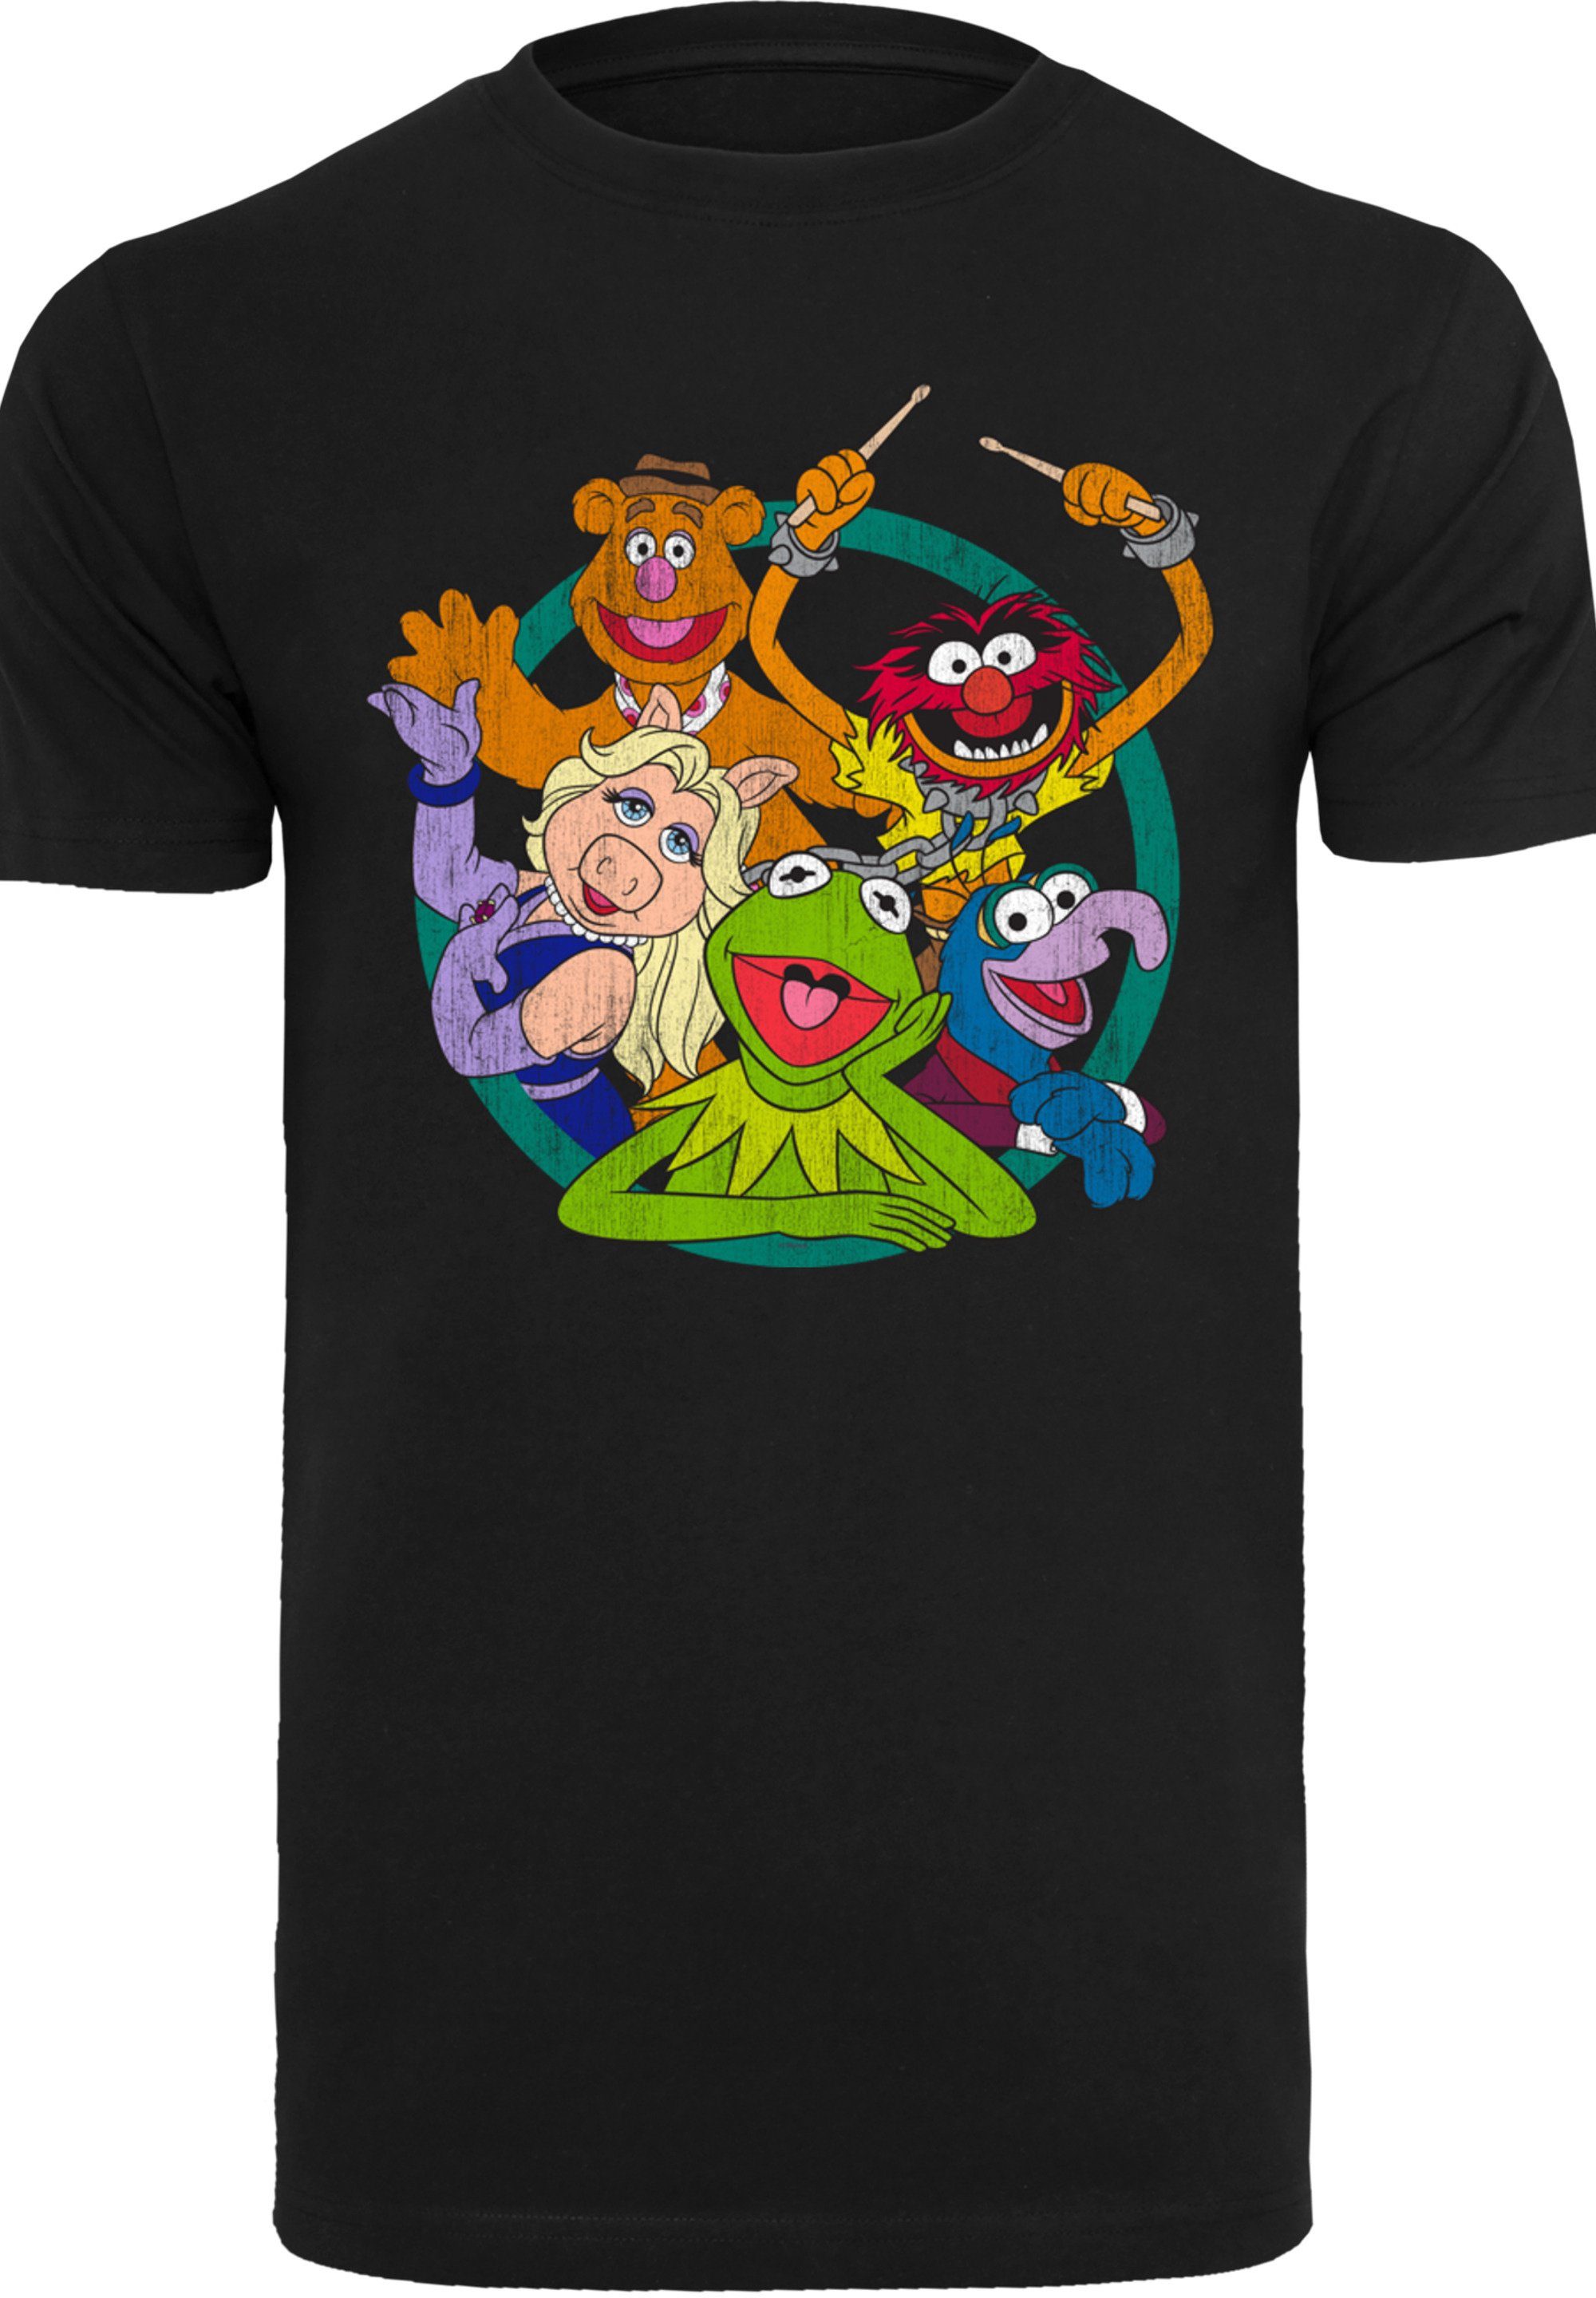 Die Print Group schwarz F4NT4STIC Disney Muppets Circle T-Shirt